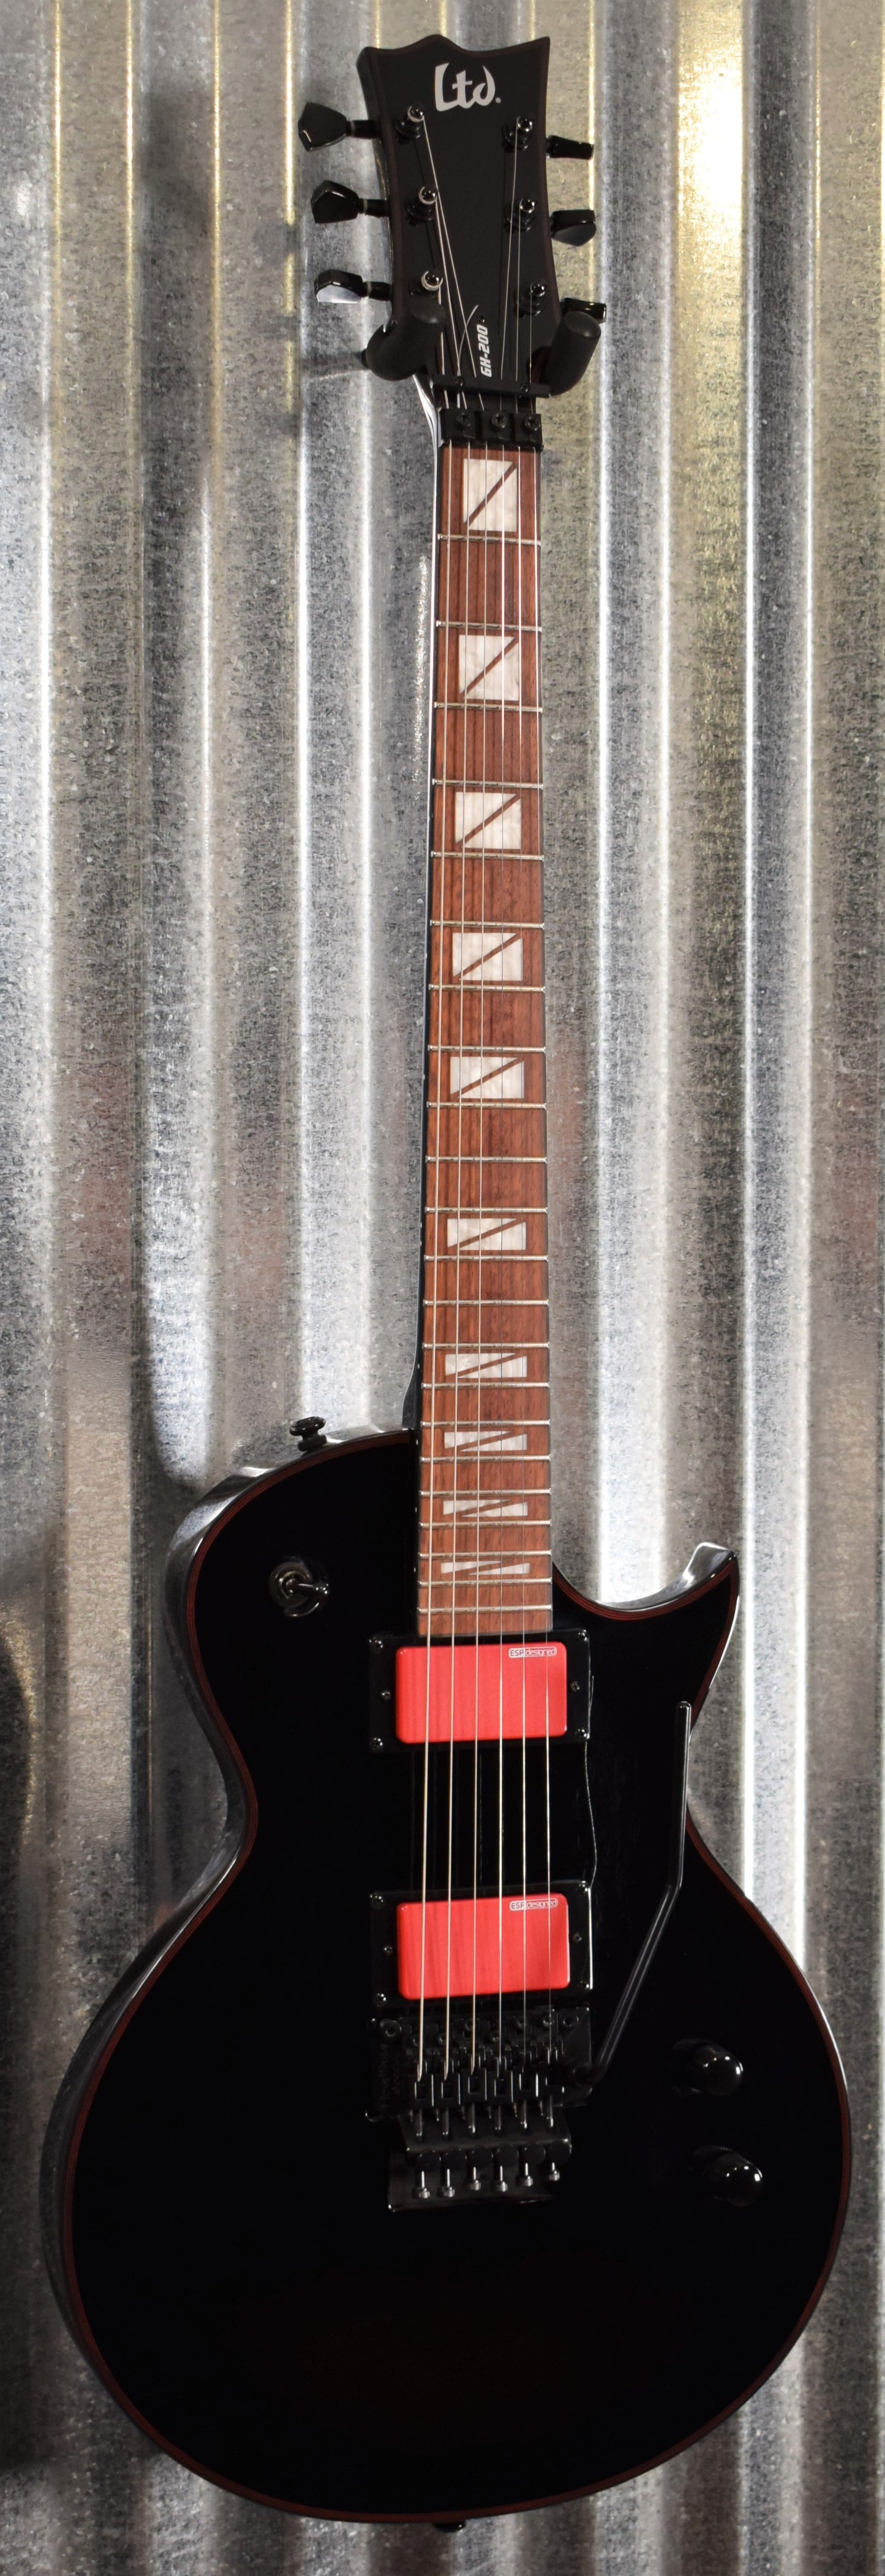 ESP LTD GH-200 Gary Holt Signature Gloss Black Guitar LGH200BLK #1400